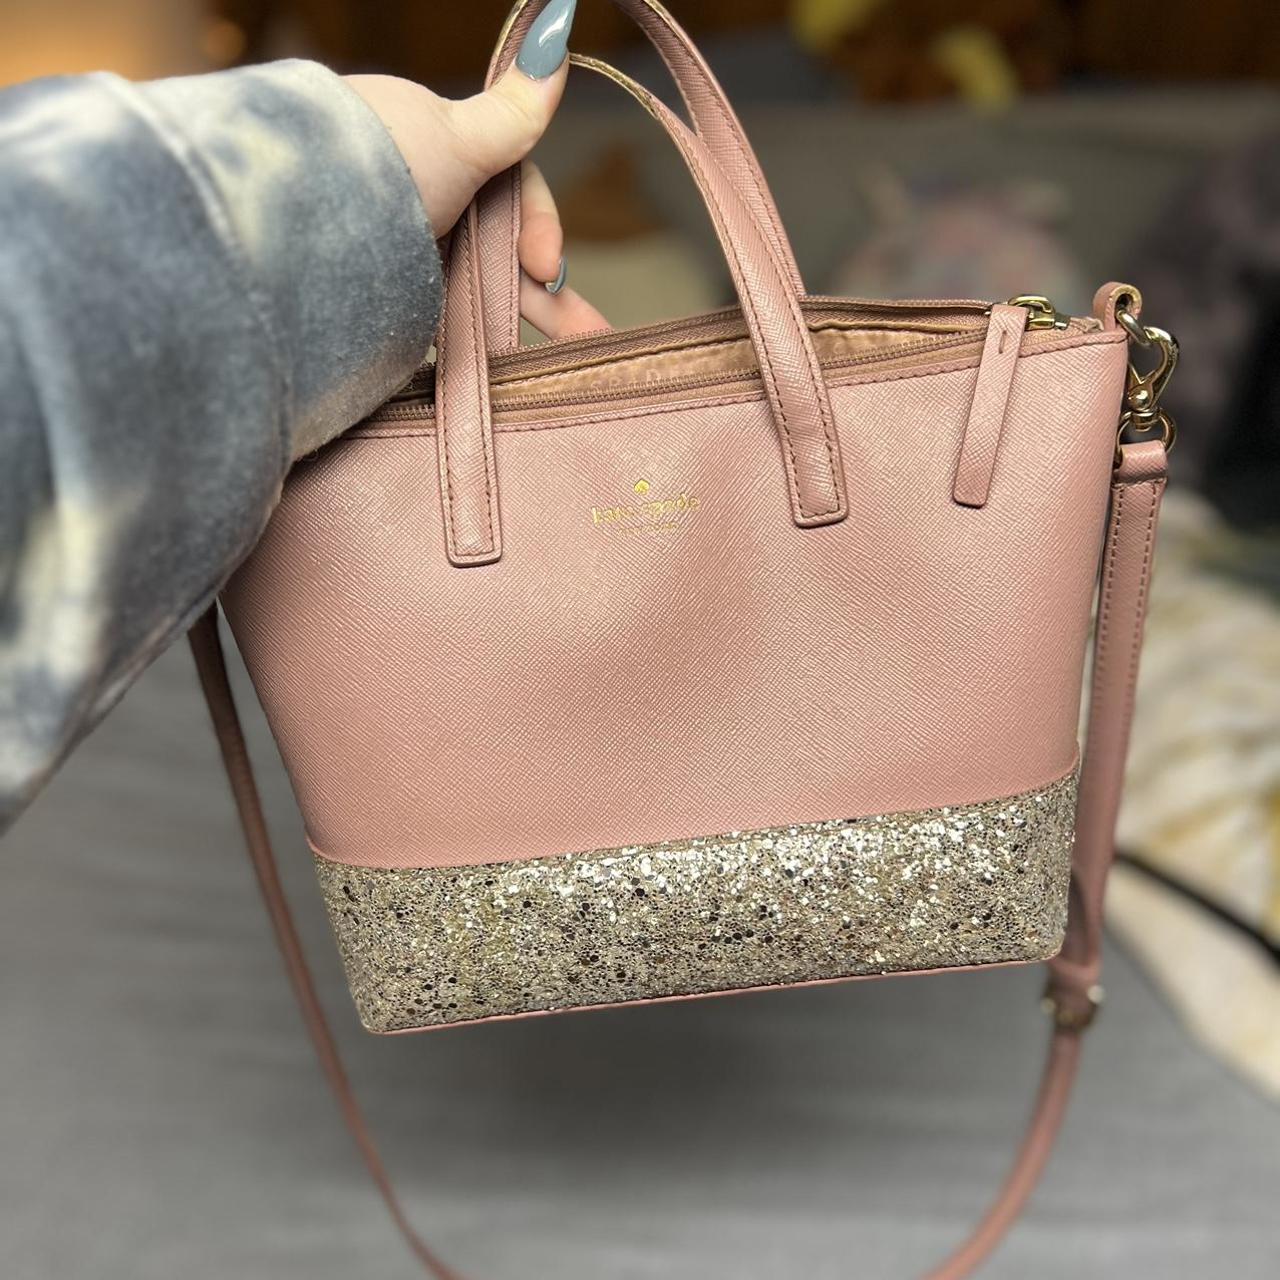 Kate Spade New York Pink Saffiano & Glitter Leather Tote Bag NWOT | Leather  tote bag, Leather tote, Kate spade new york